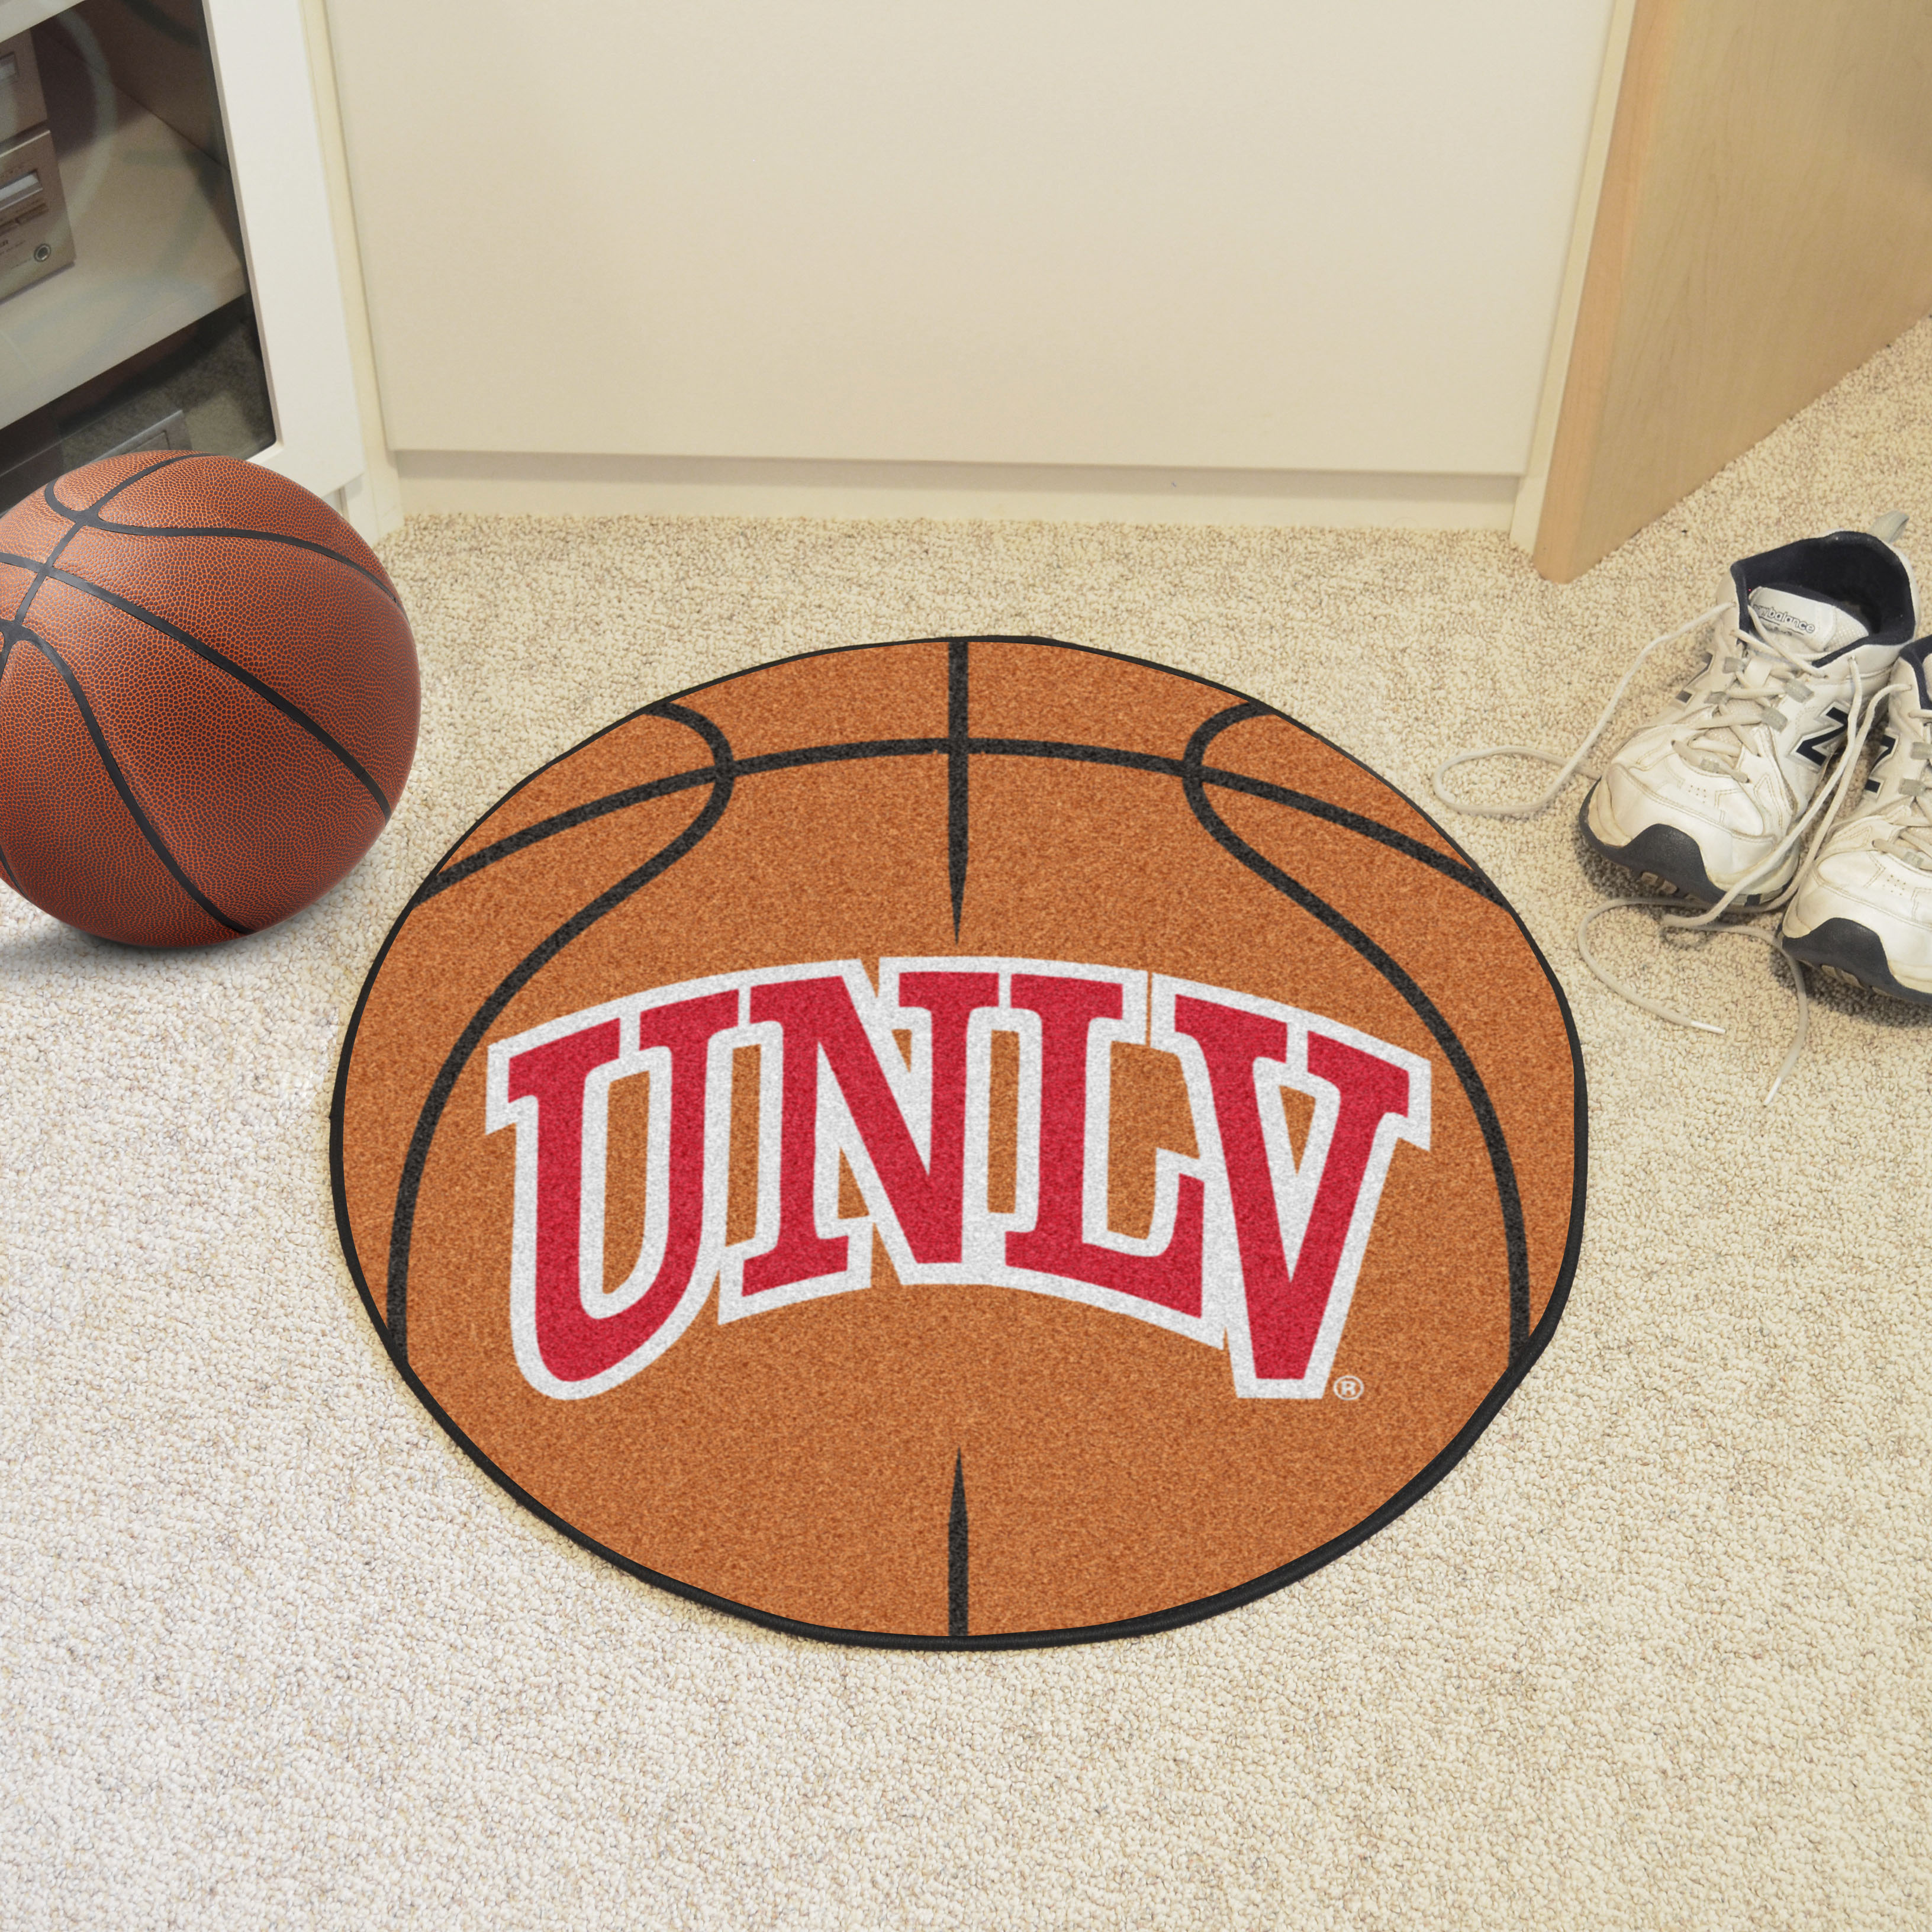 University of Nevada Las Vegas Ball Shaped Area rugs (Ball Shaped Area Rugs: Basketball)